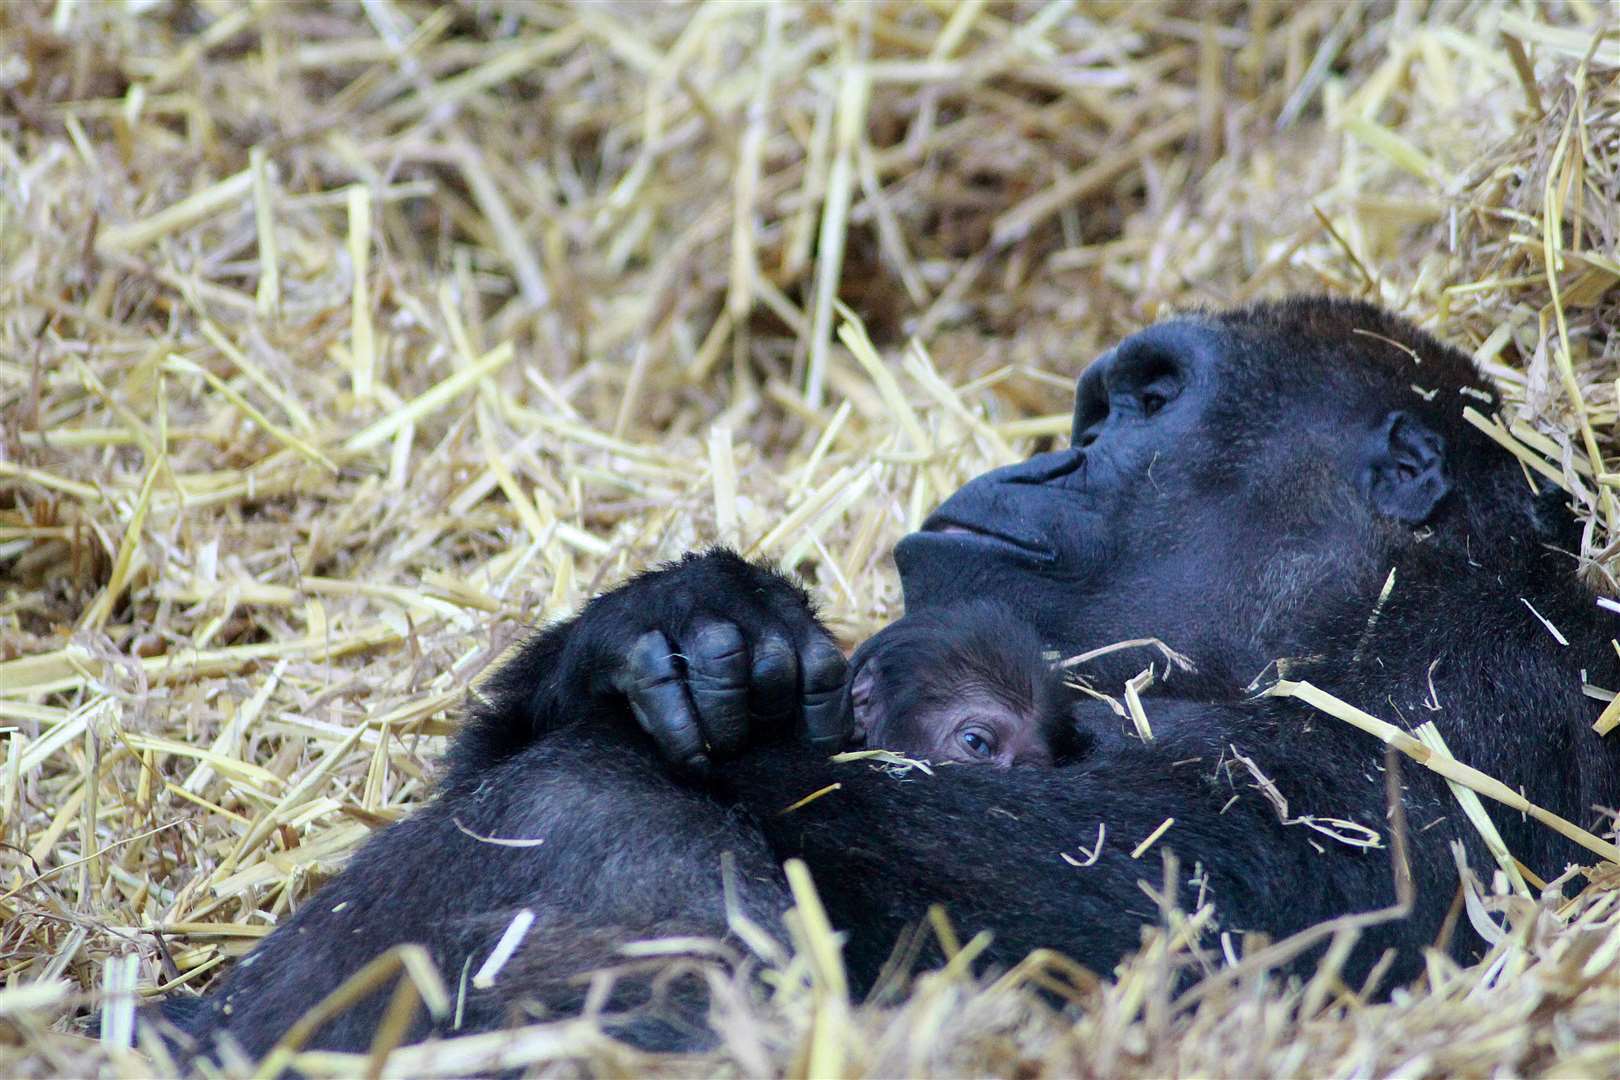 A baby gorilla born at Port Lympne in 2020. Photo: Leanne Smith